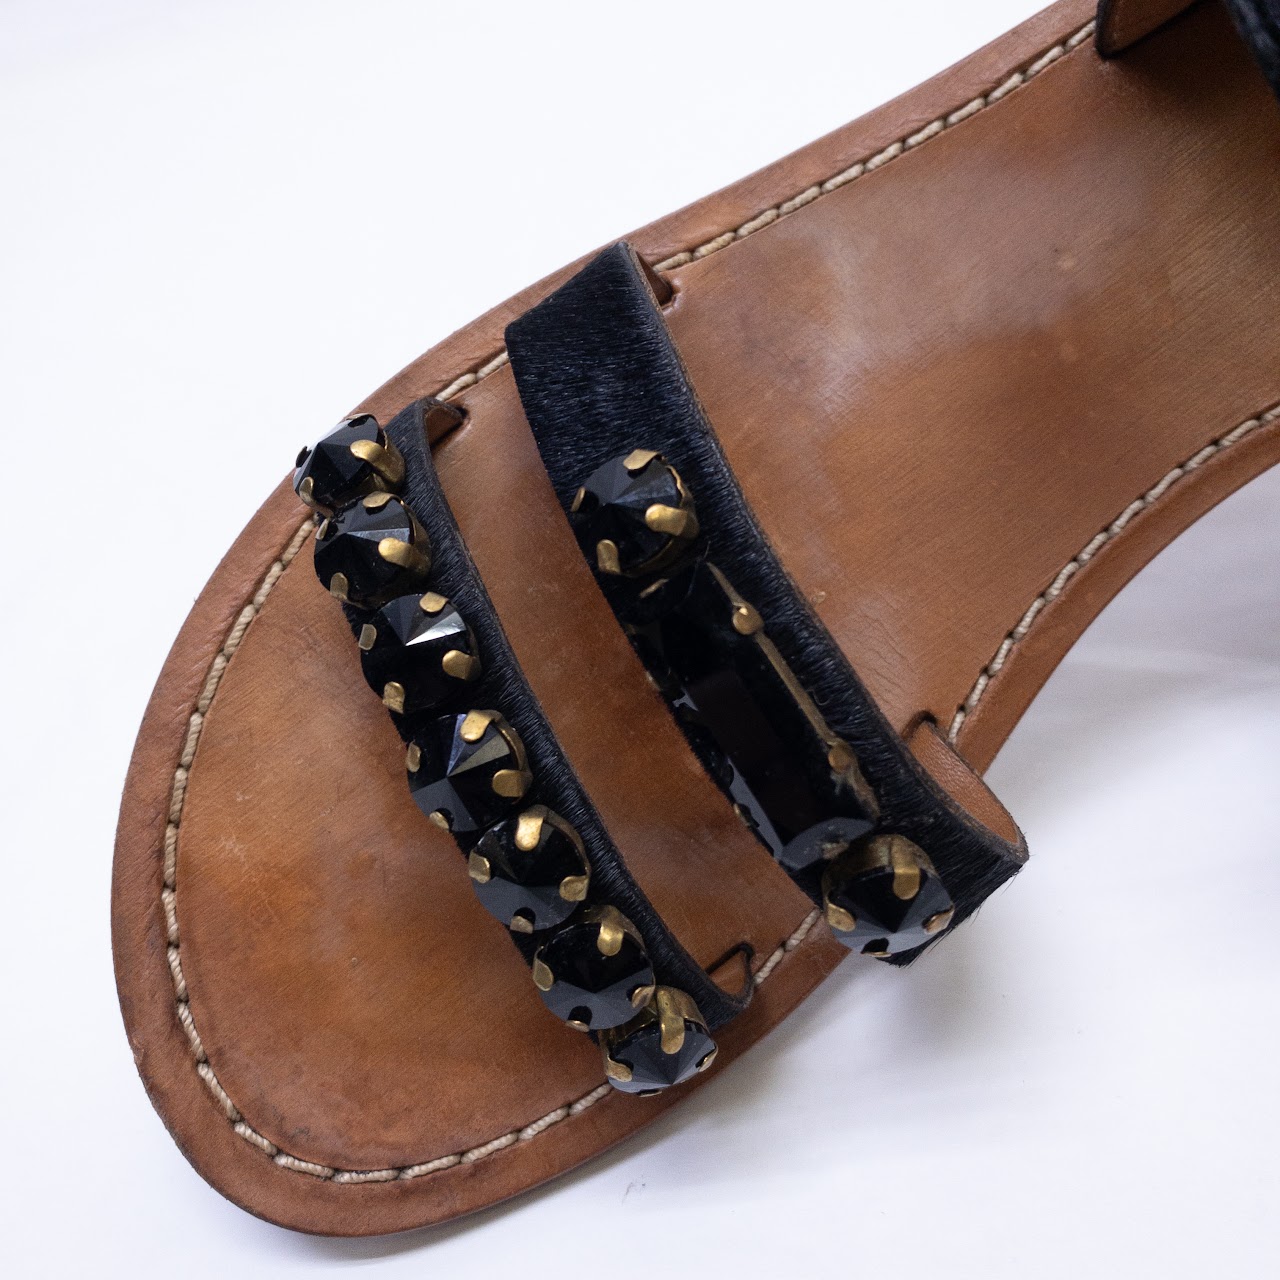 Marni Jeweled Calf Hair Sandals